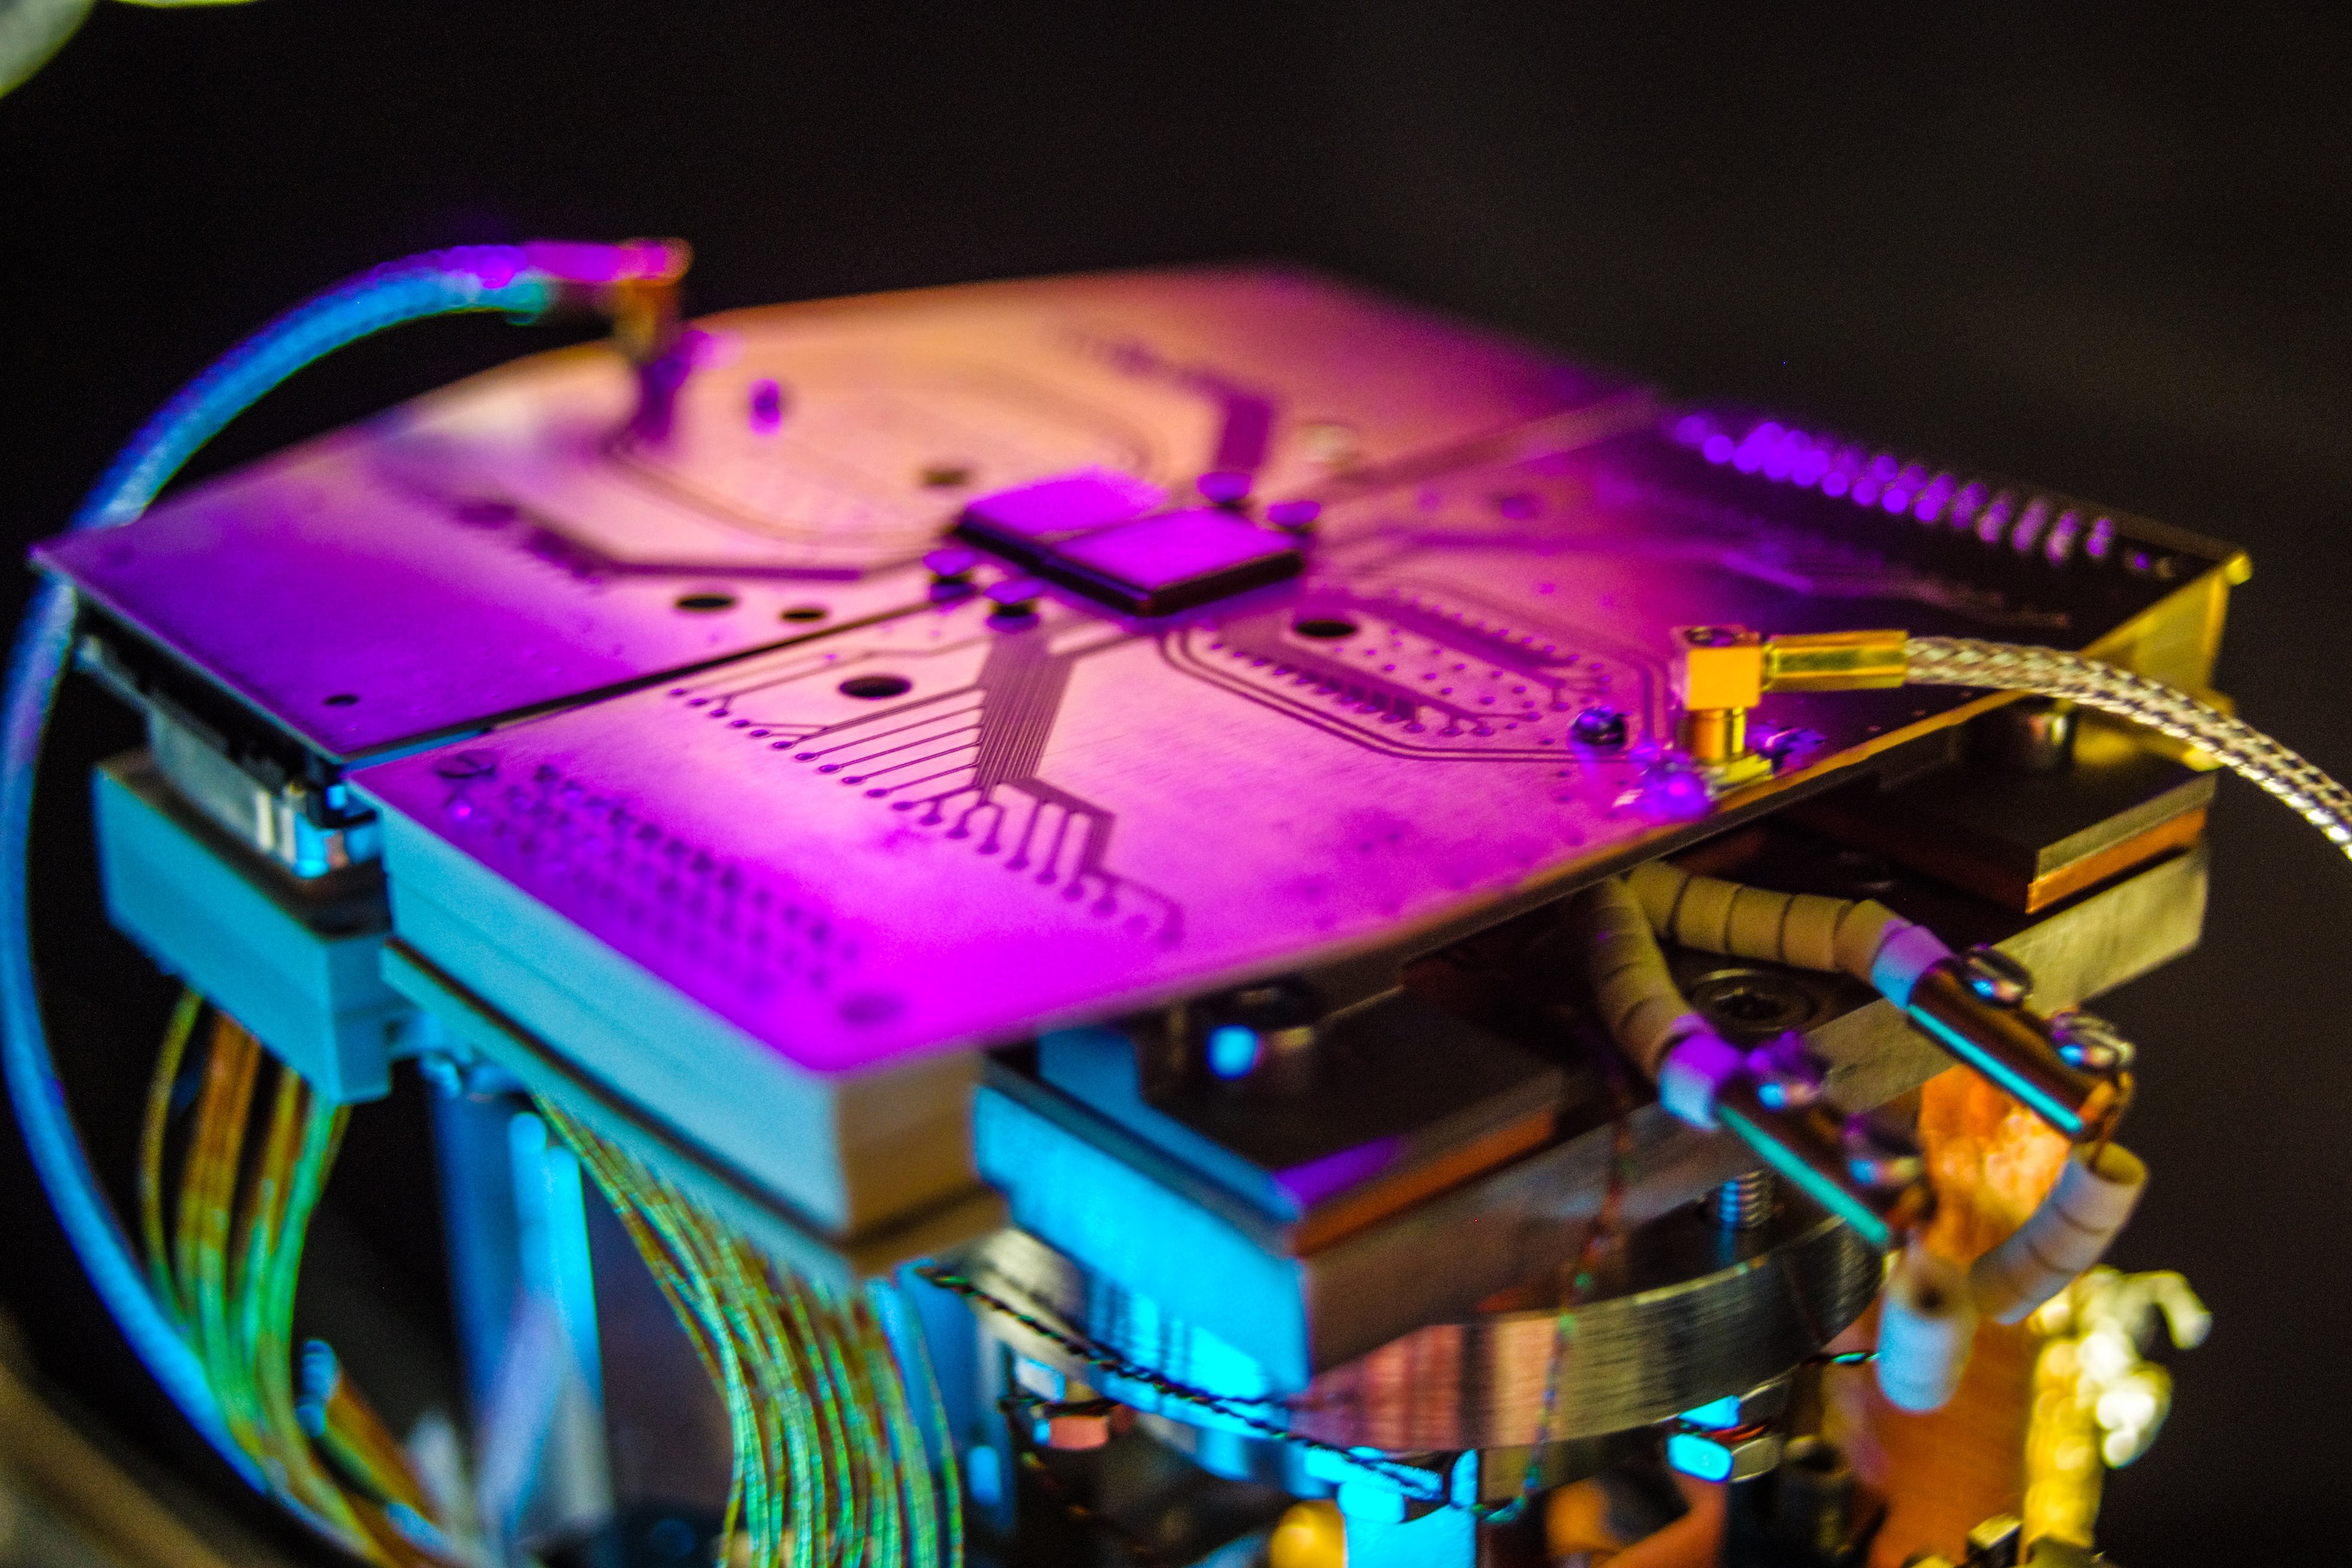 A two module quantum computer prototype